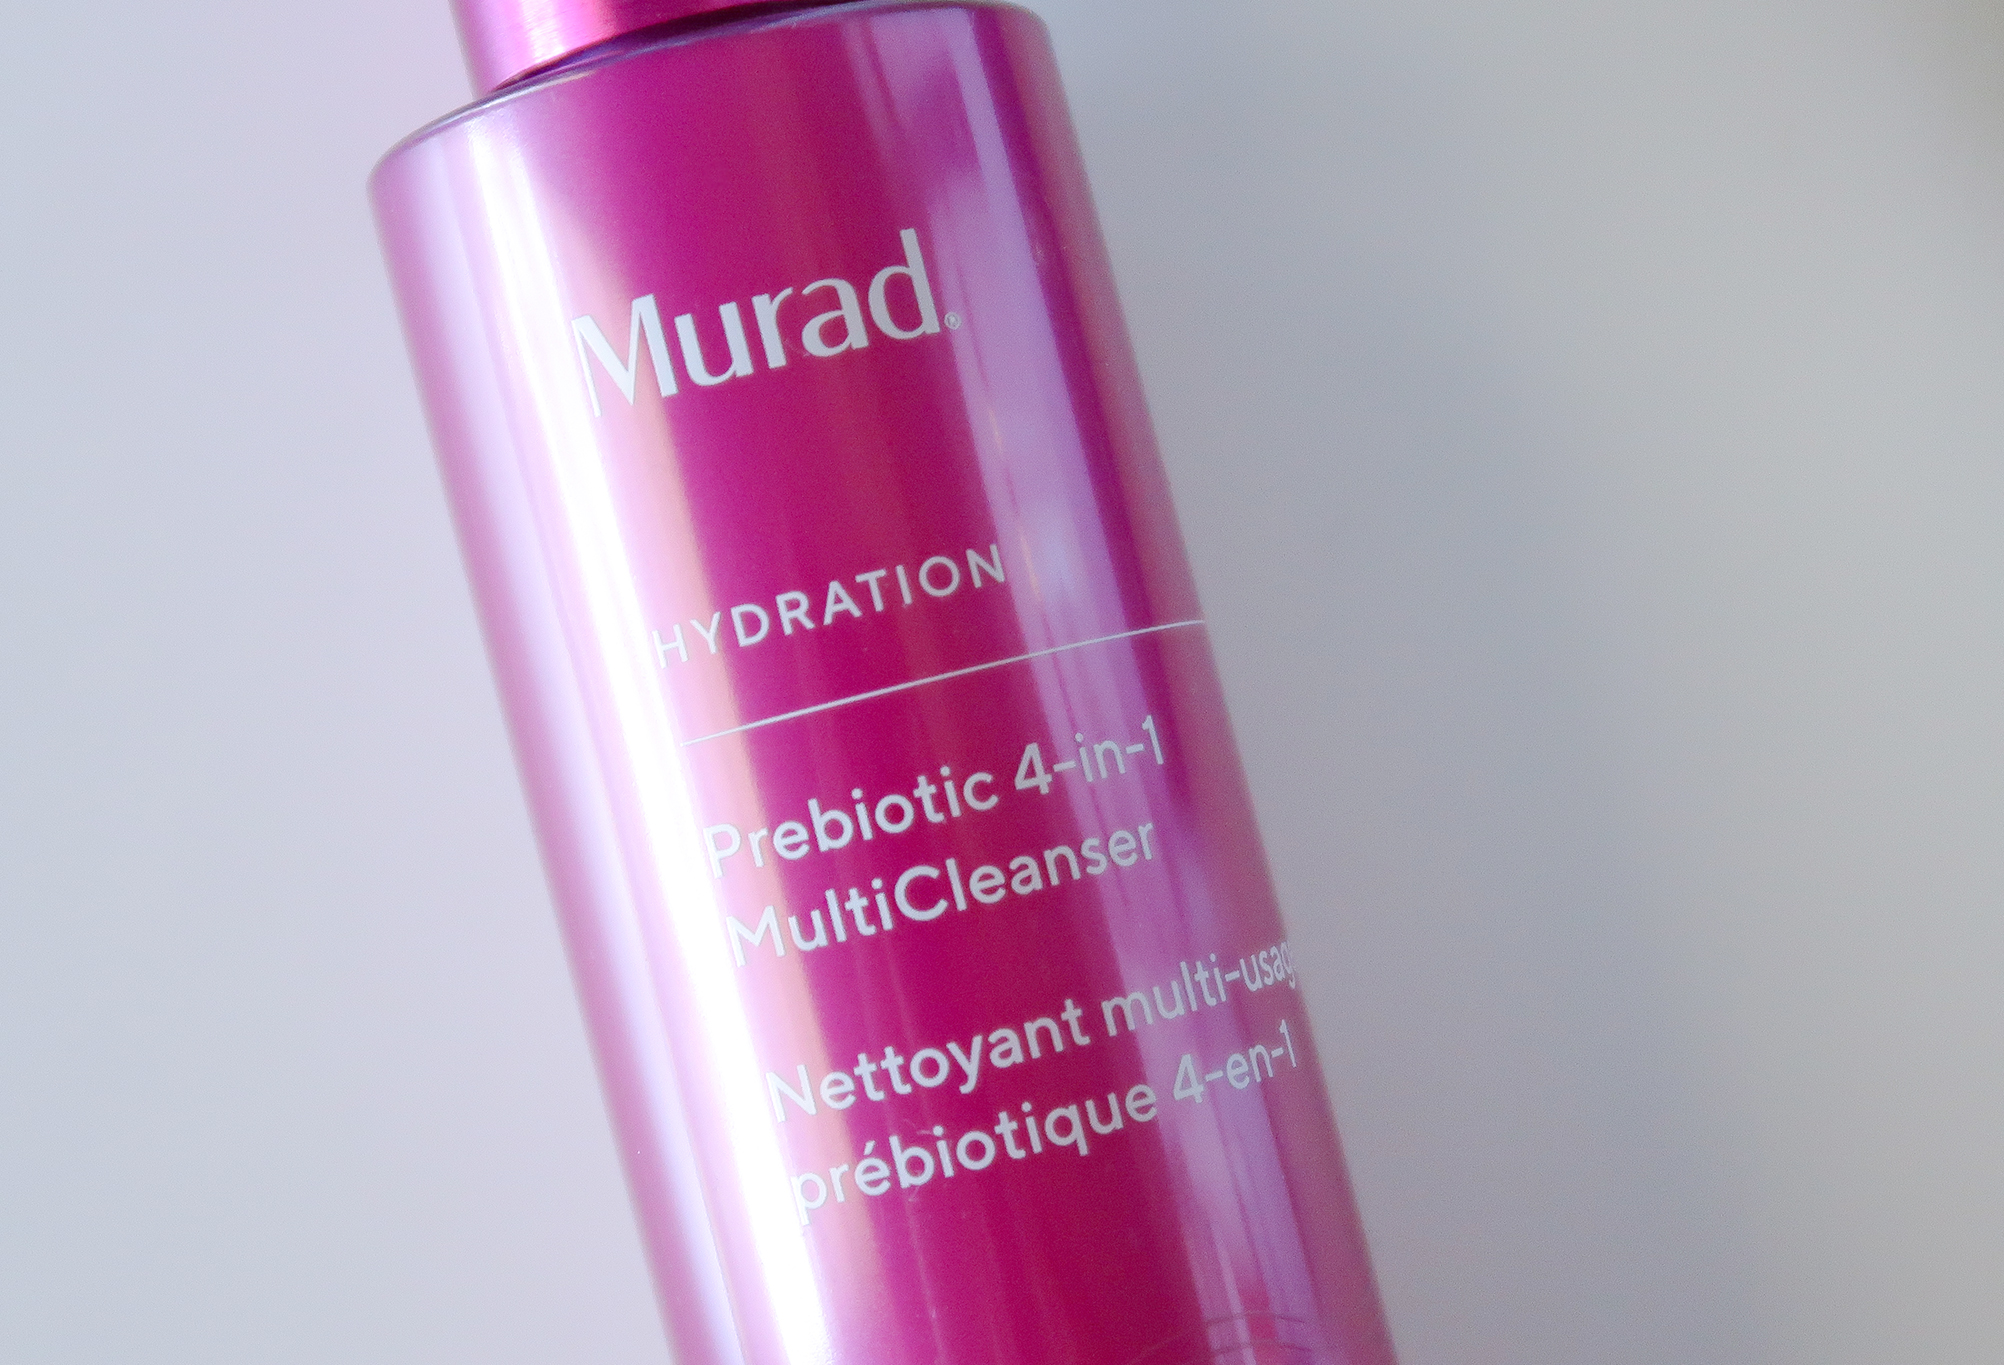 Close up of Murad Prebiotic 4-in-1 Multi Cleanser